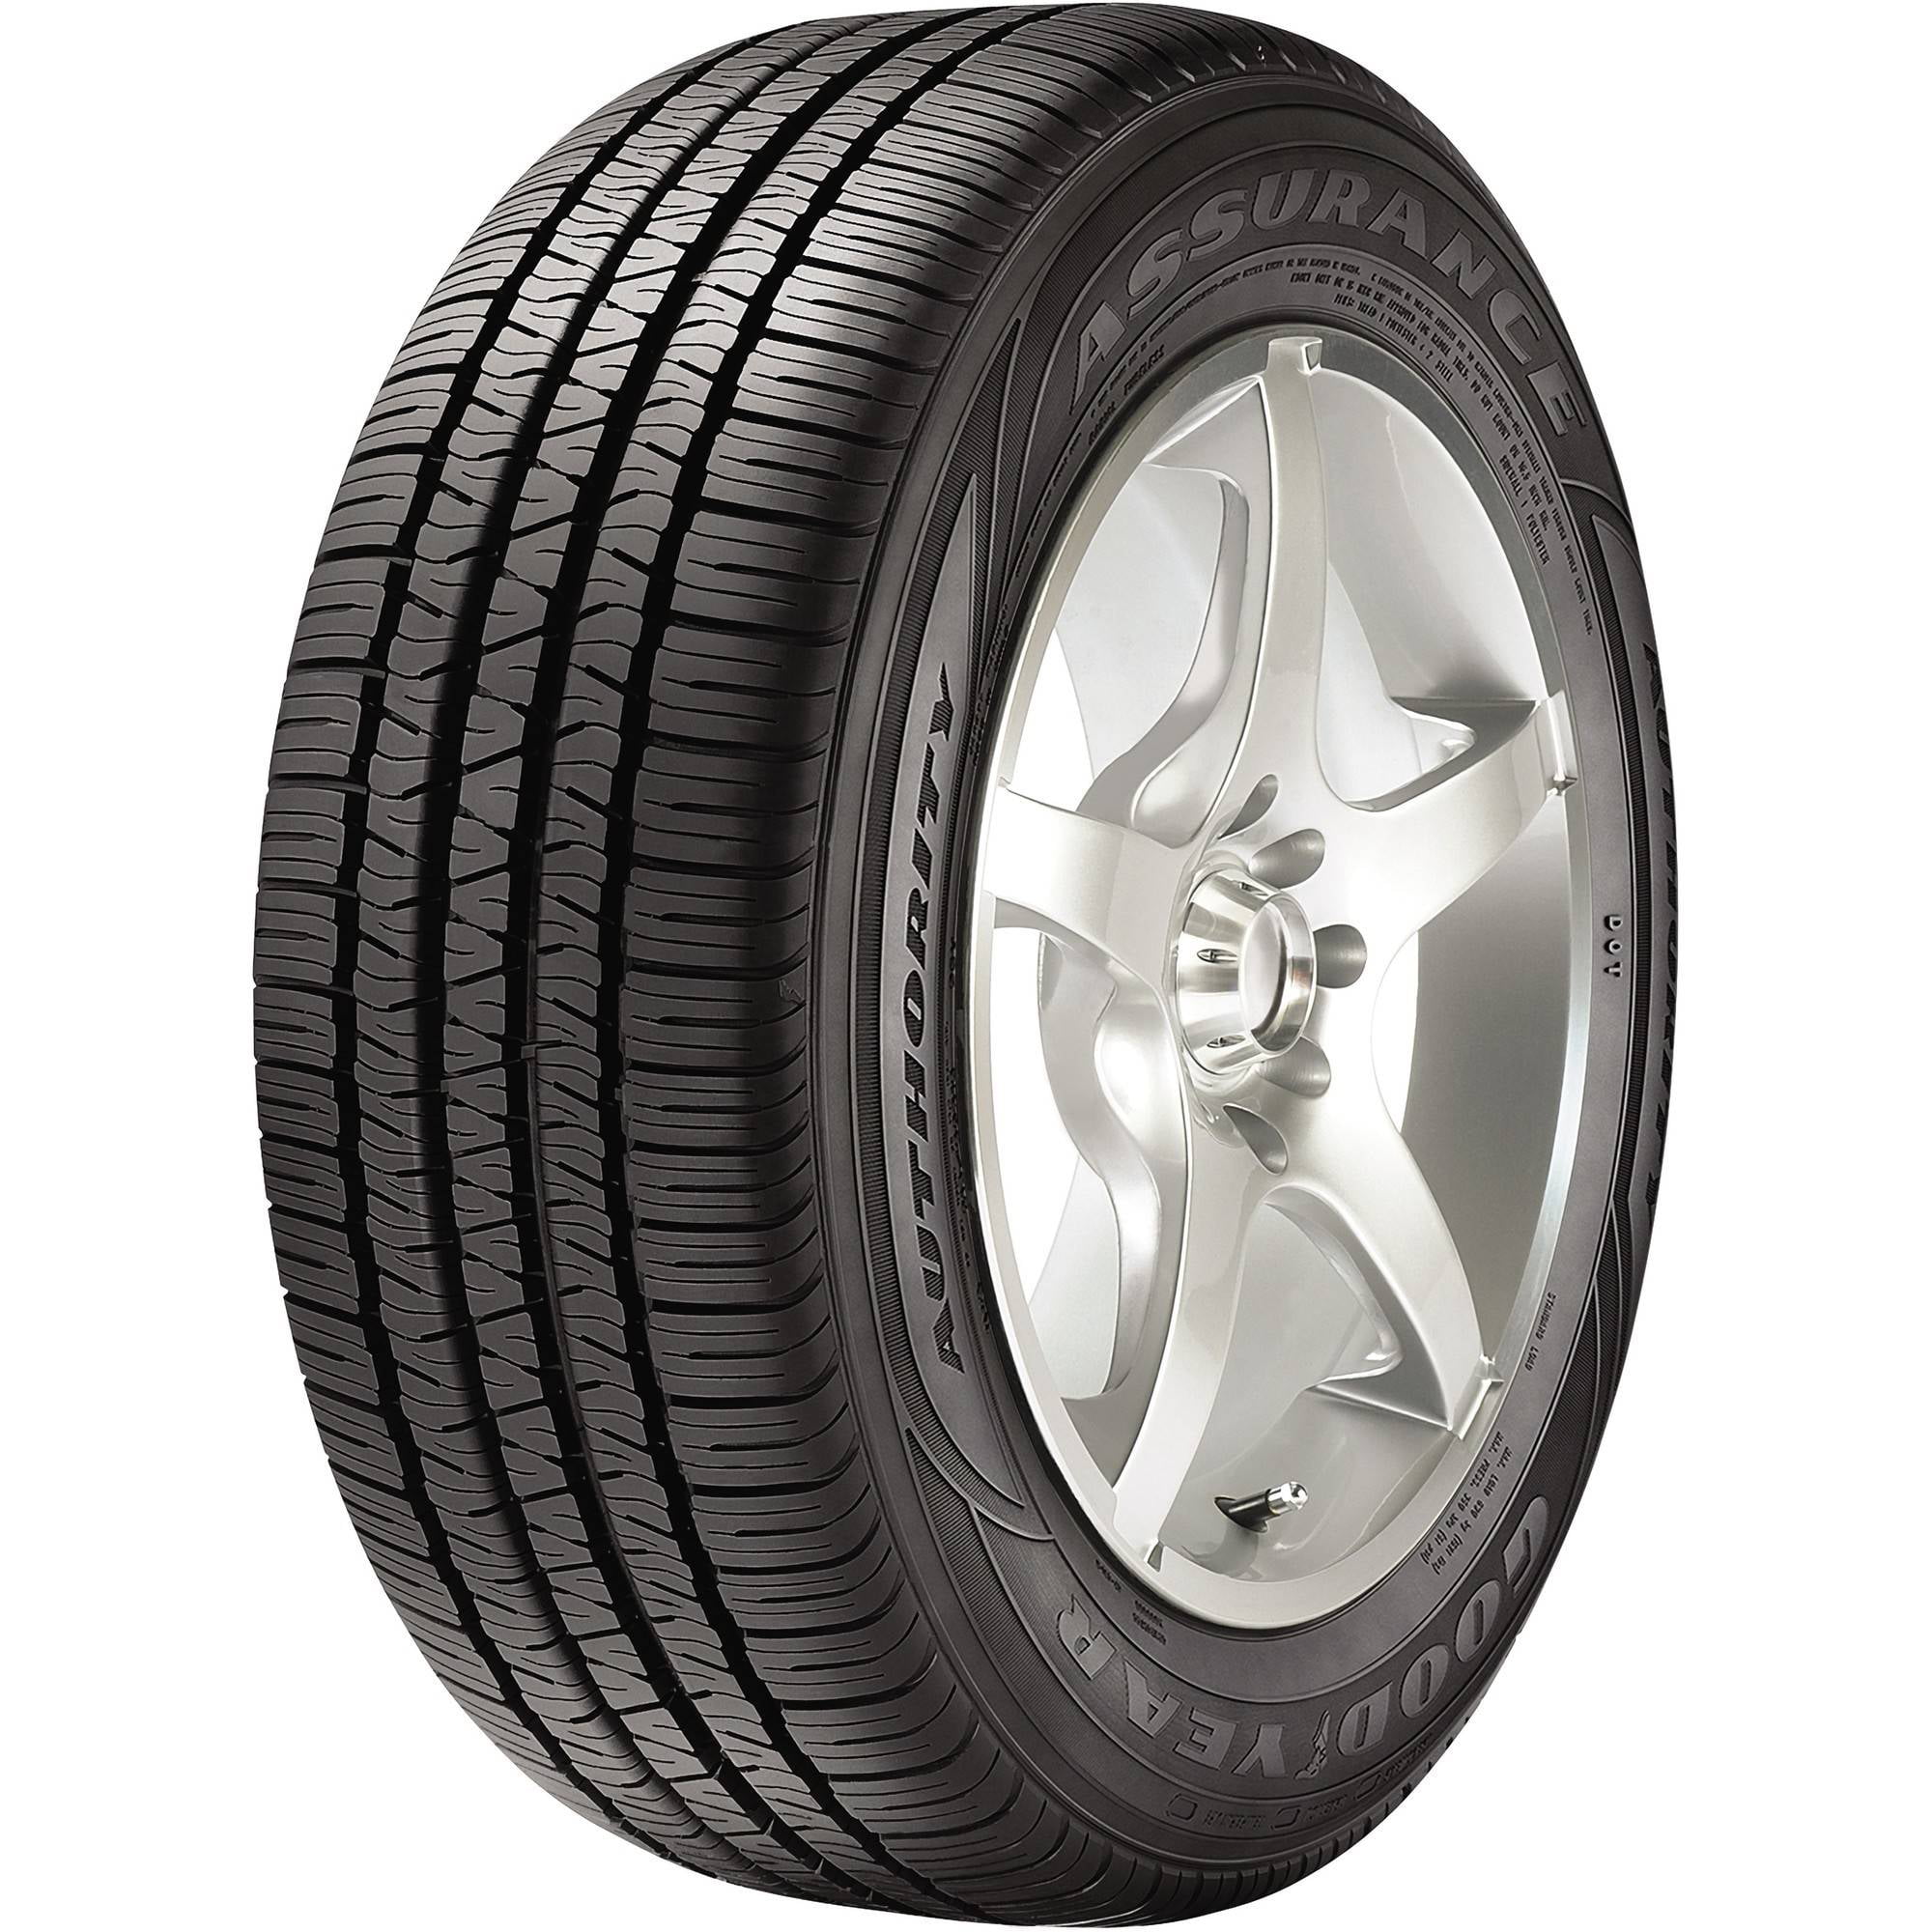 Goodyear Assurance 225/55R17 97 V Tire